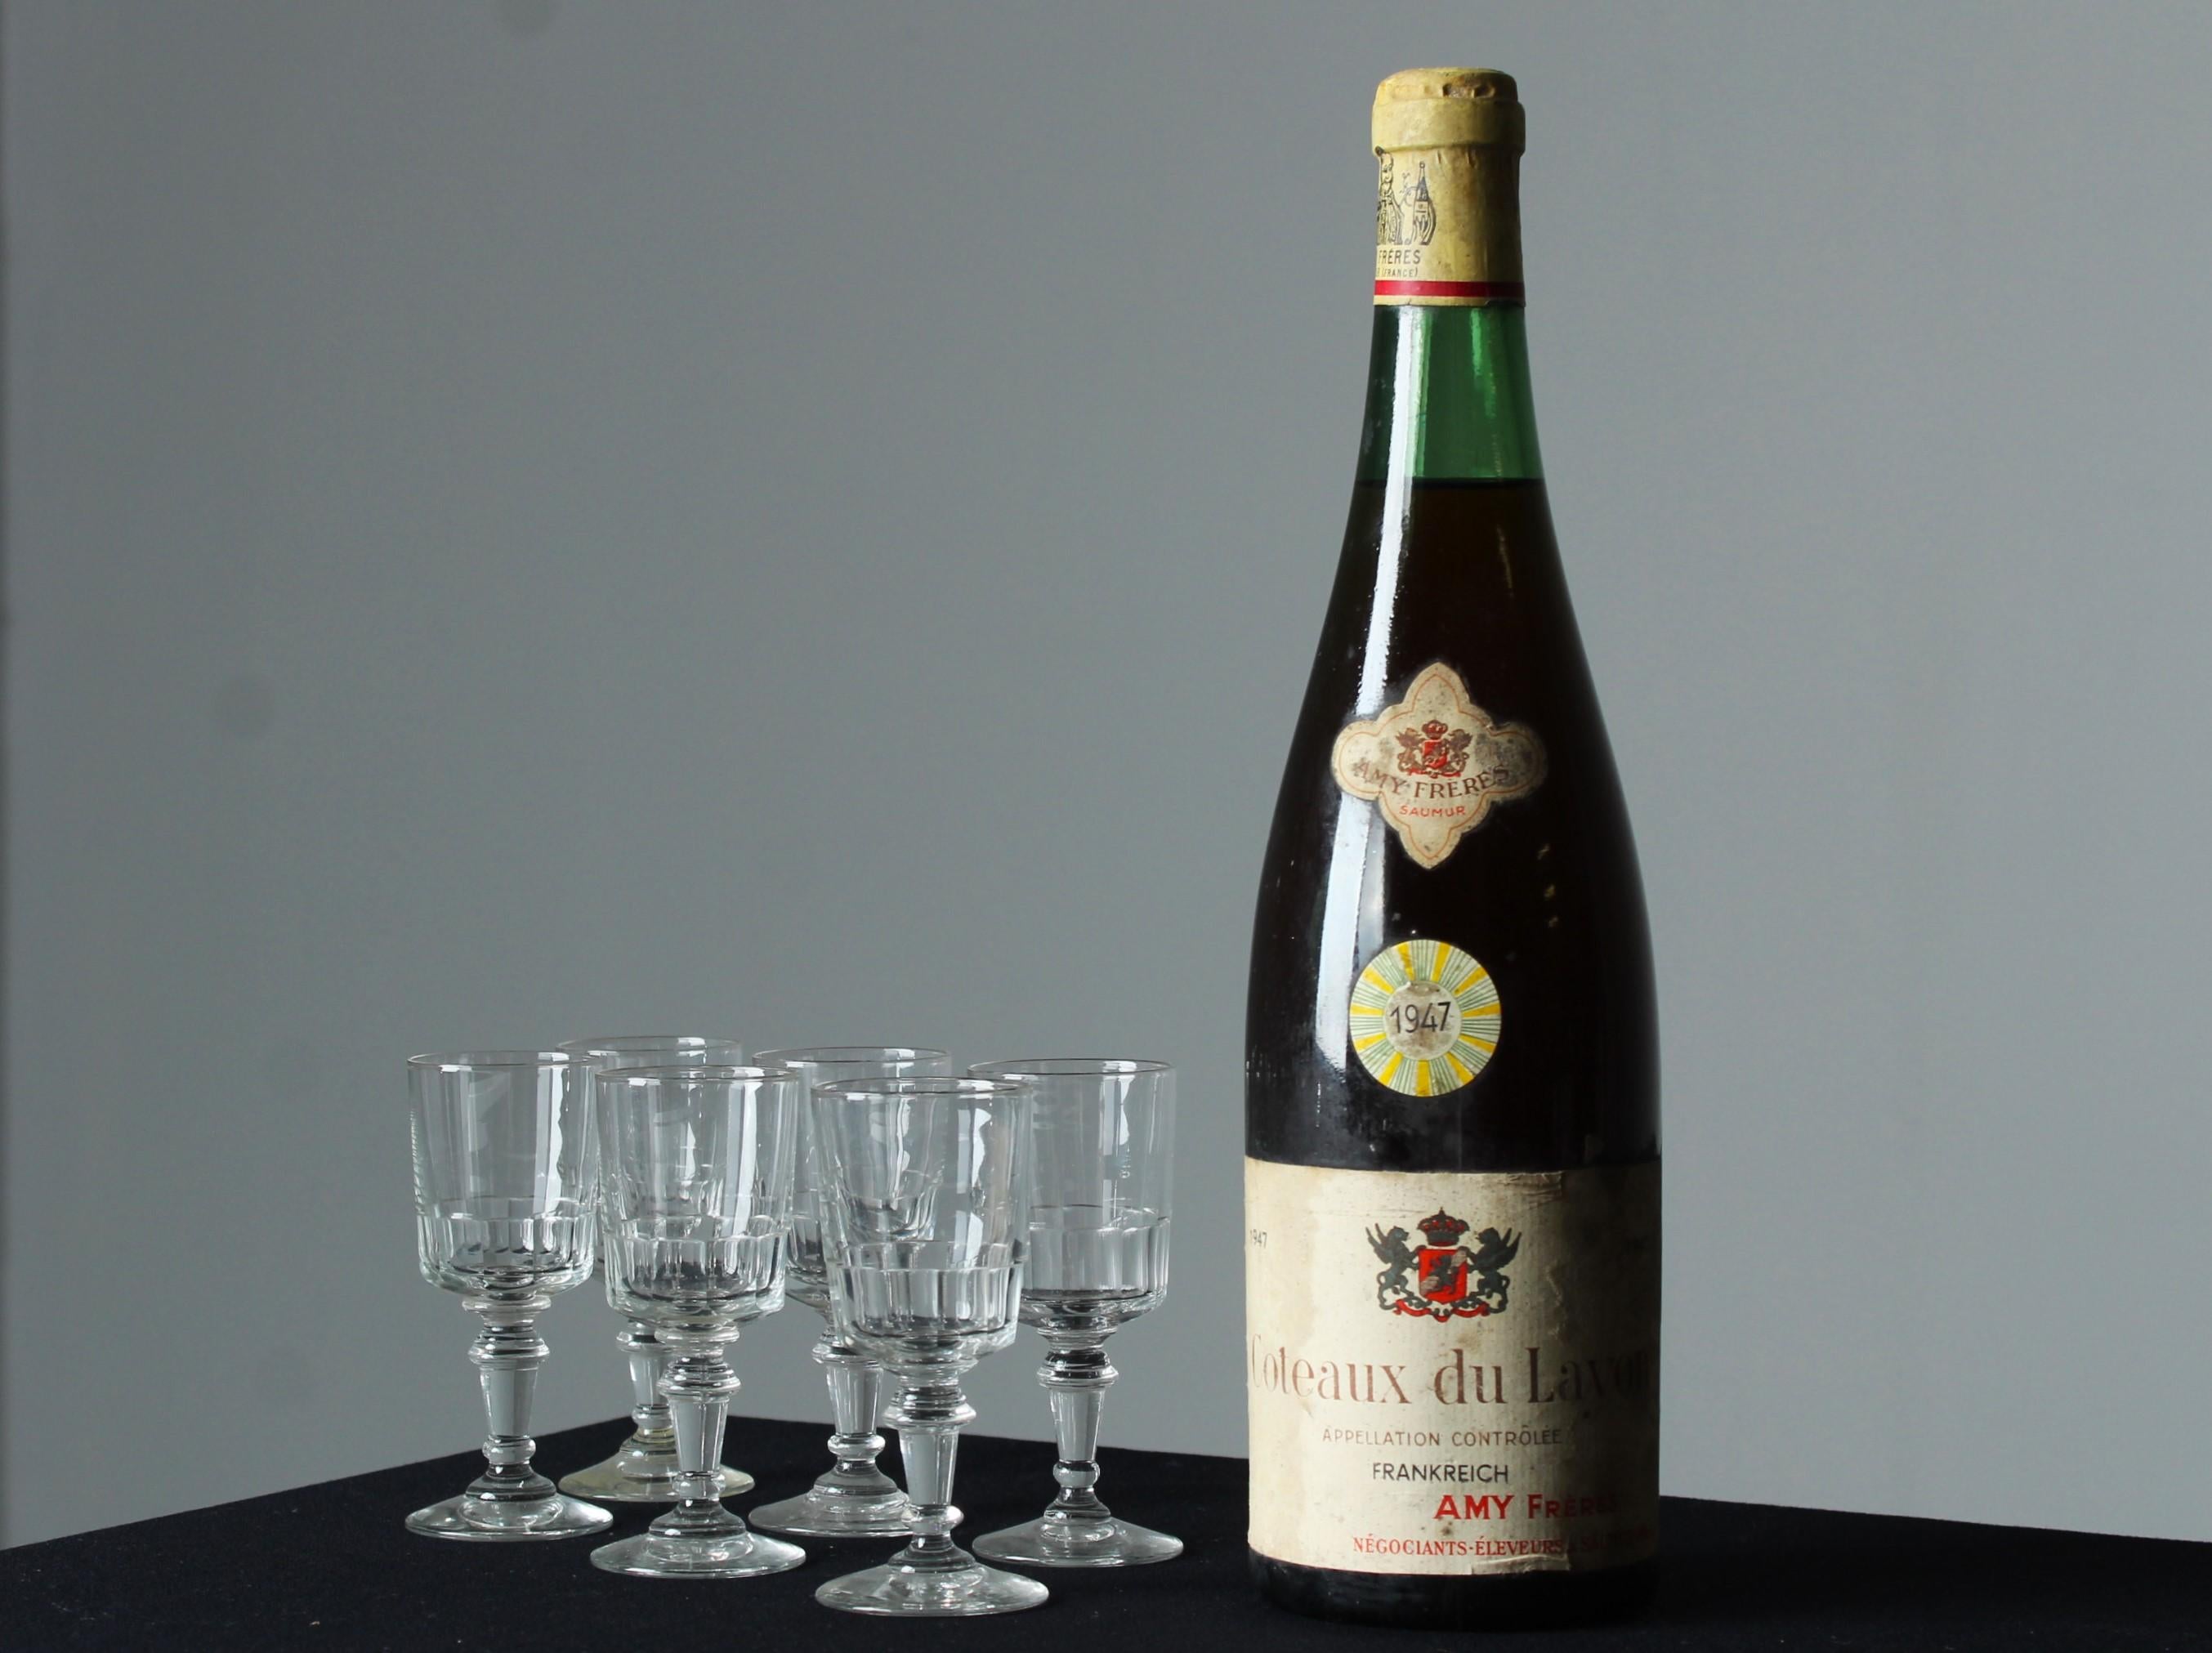 Un bel ensemble de six verres à schnaps, France, 20e siècle.

